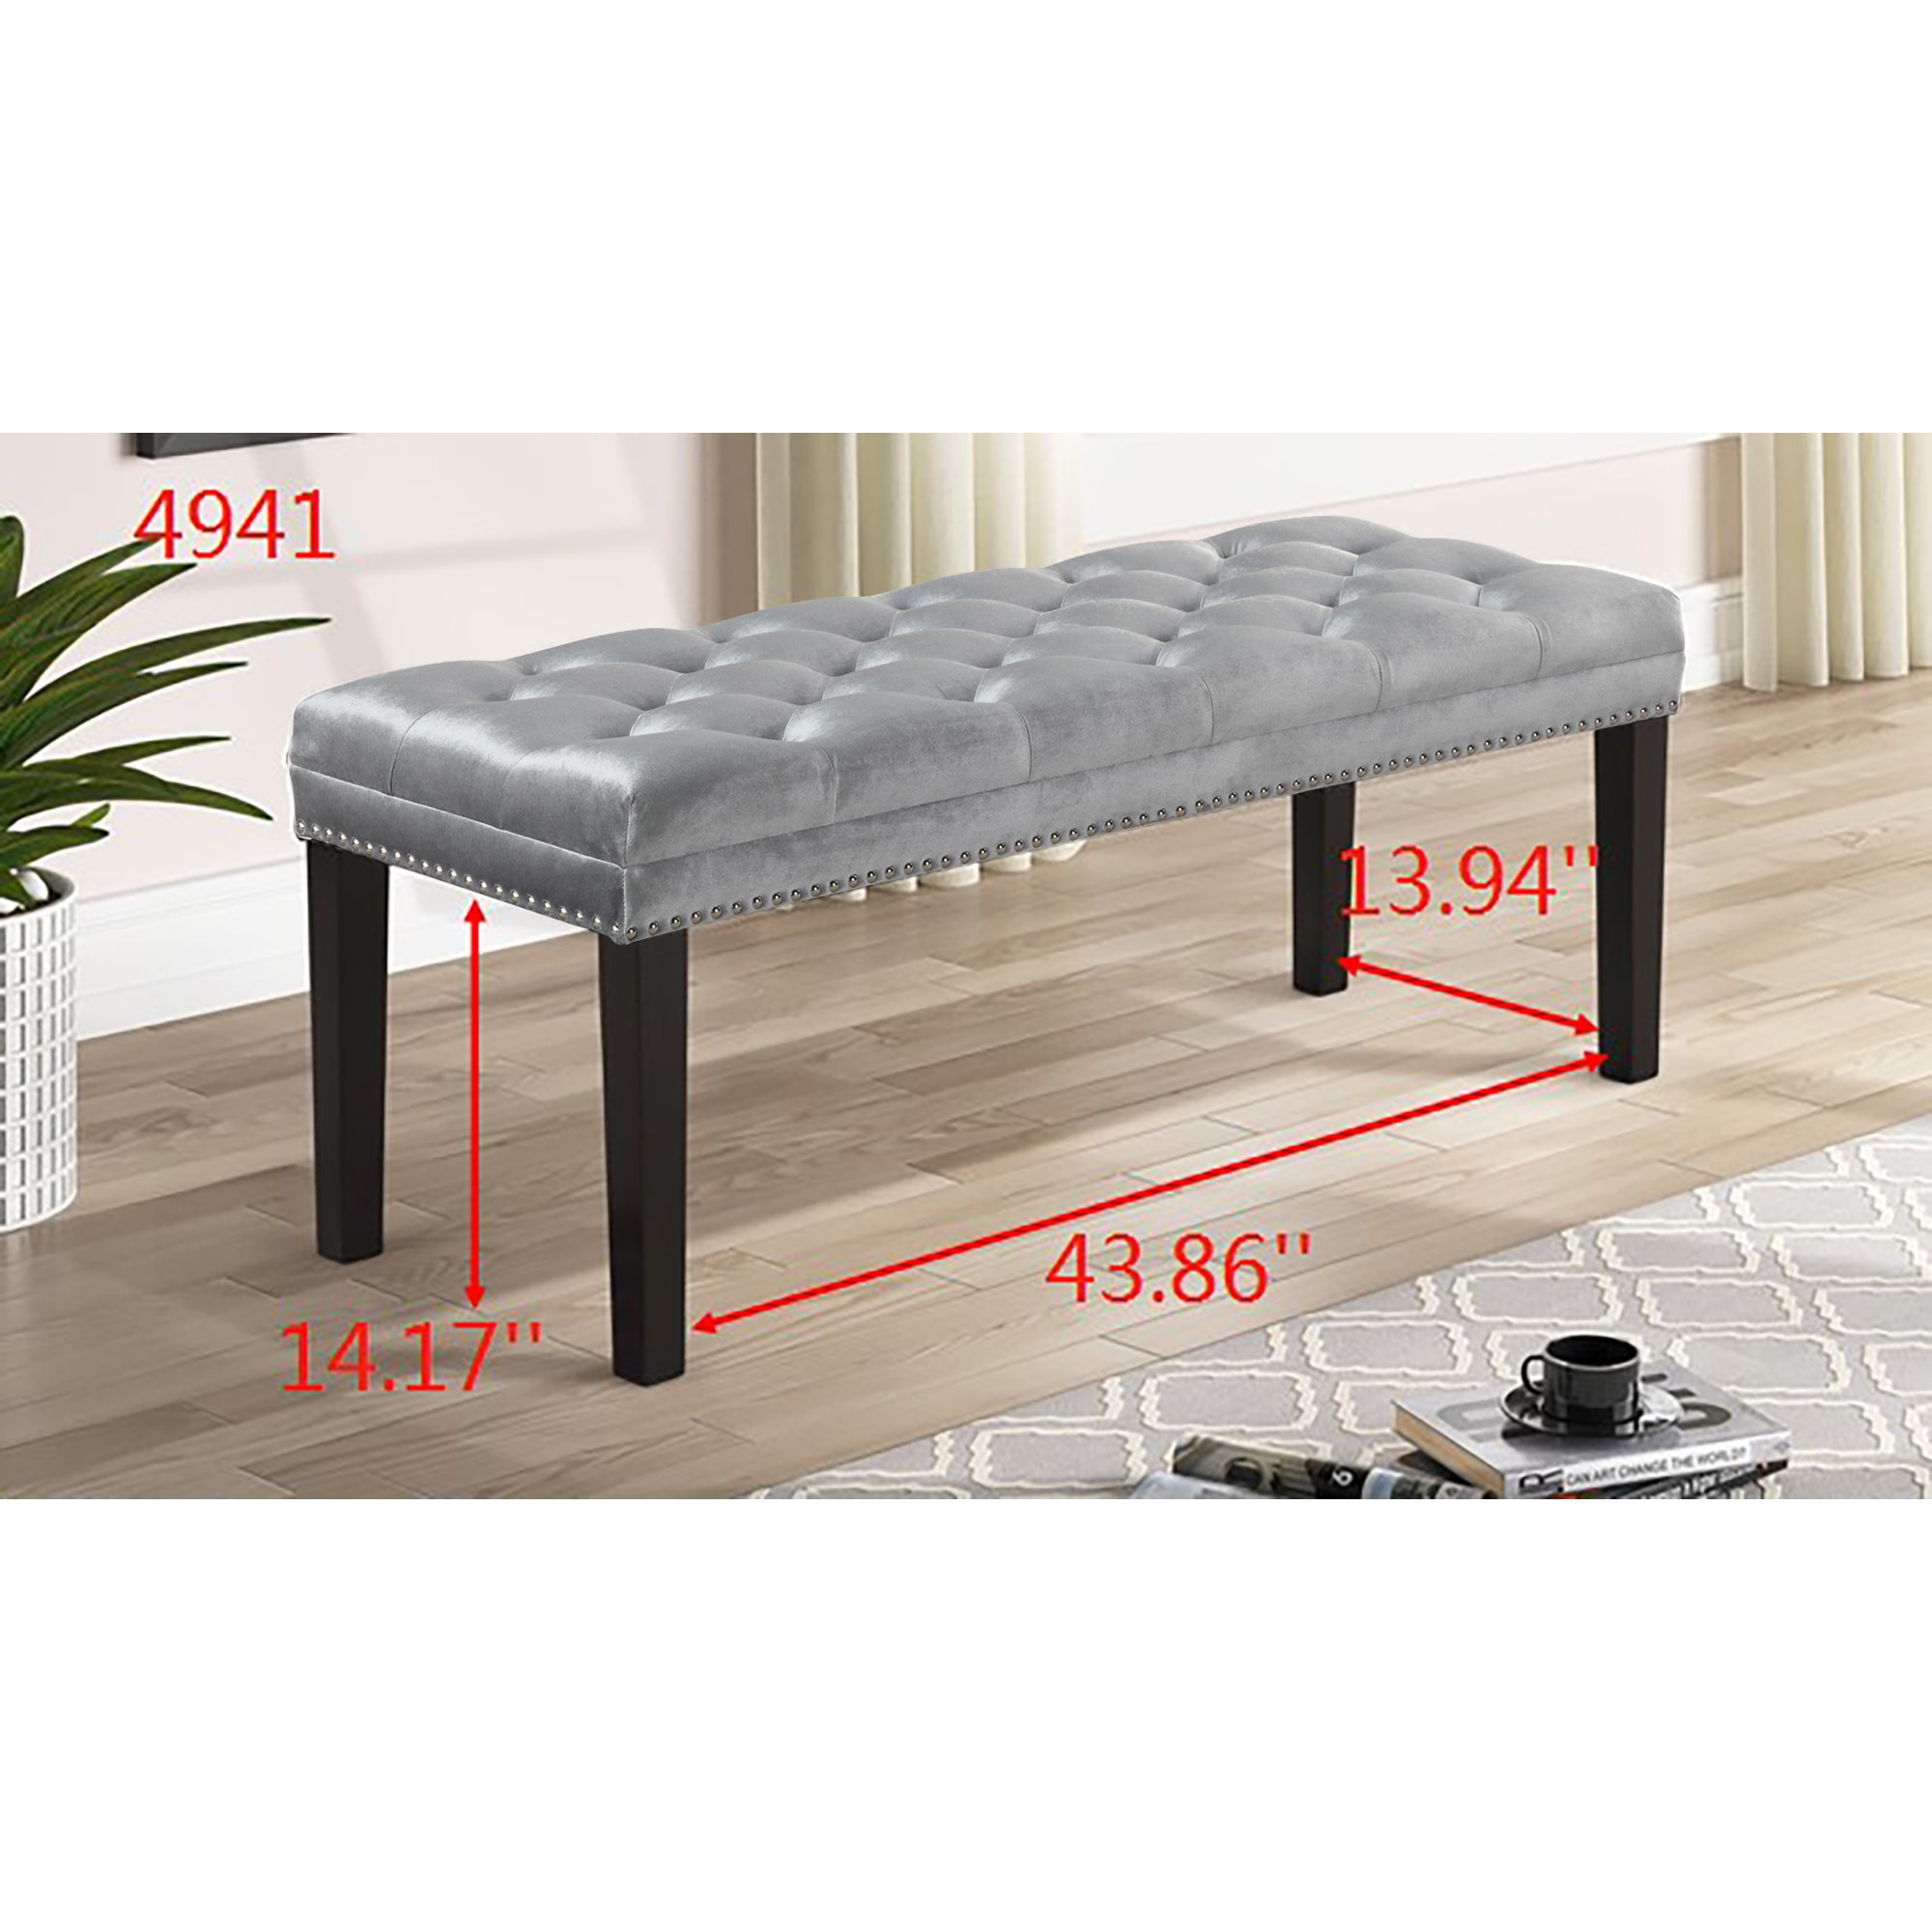 Crown Mark Hilara 2134-BENCH Transitional Dining Bench with Upholstered  Seat, Wayside Furniture & Mattress